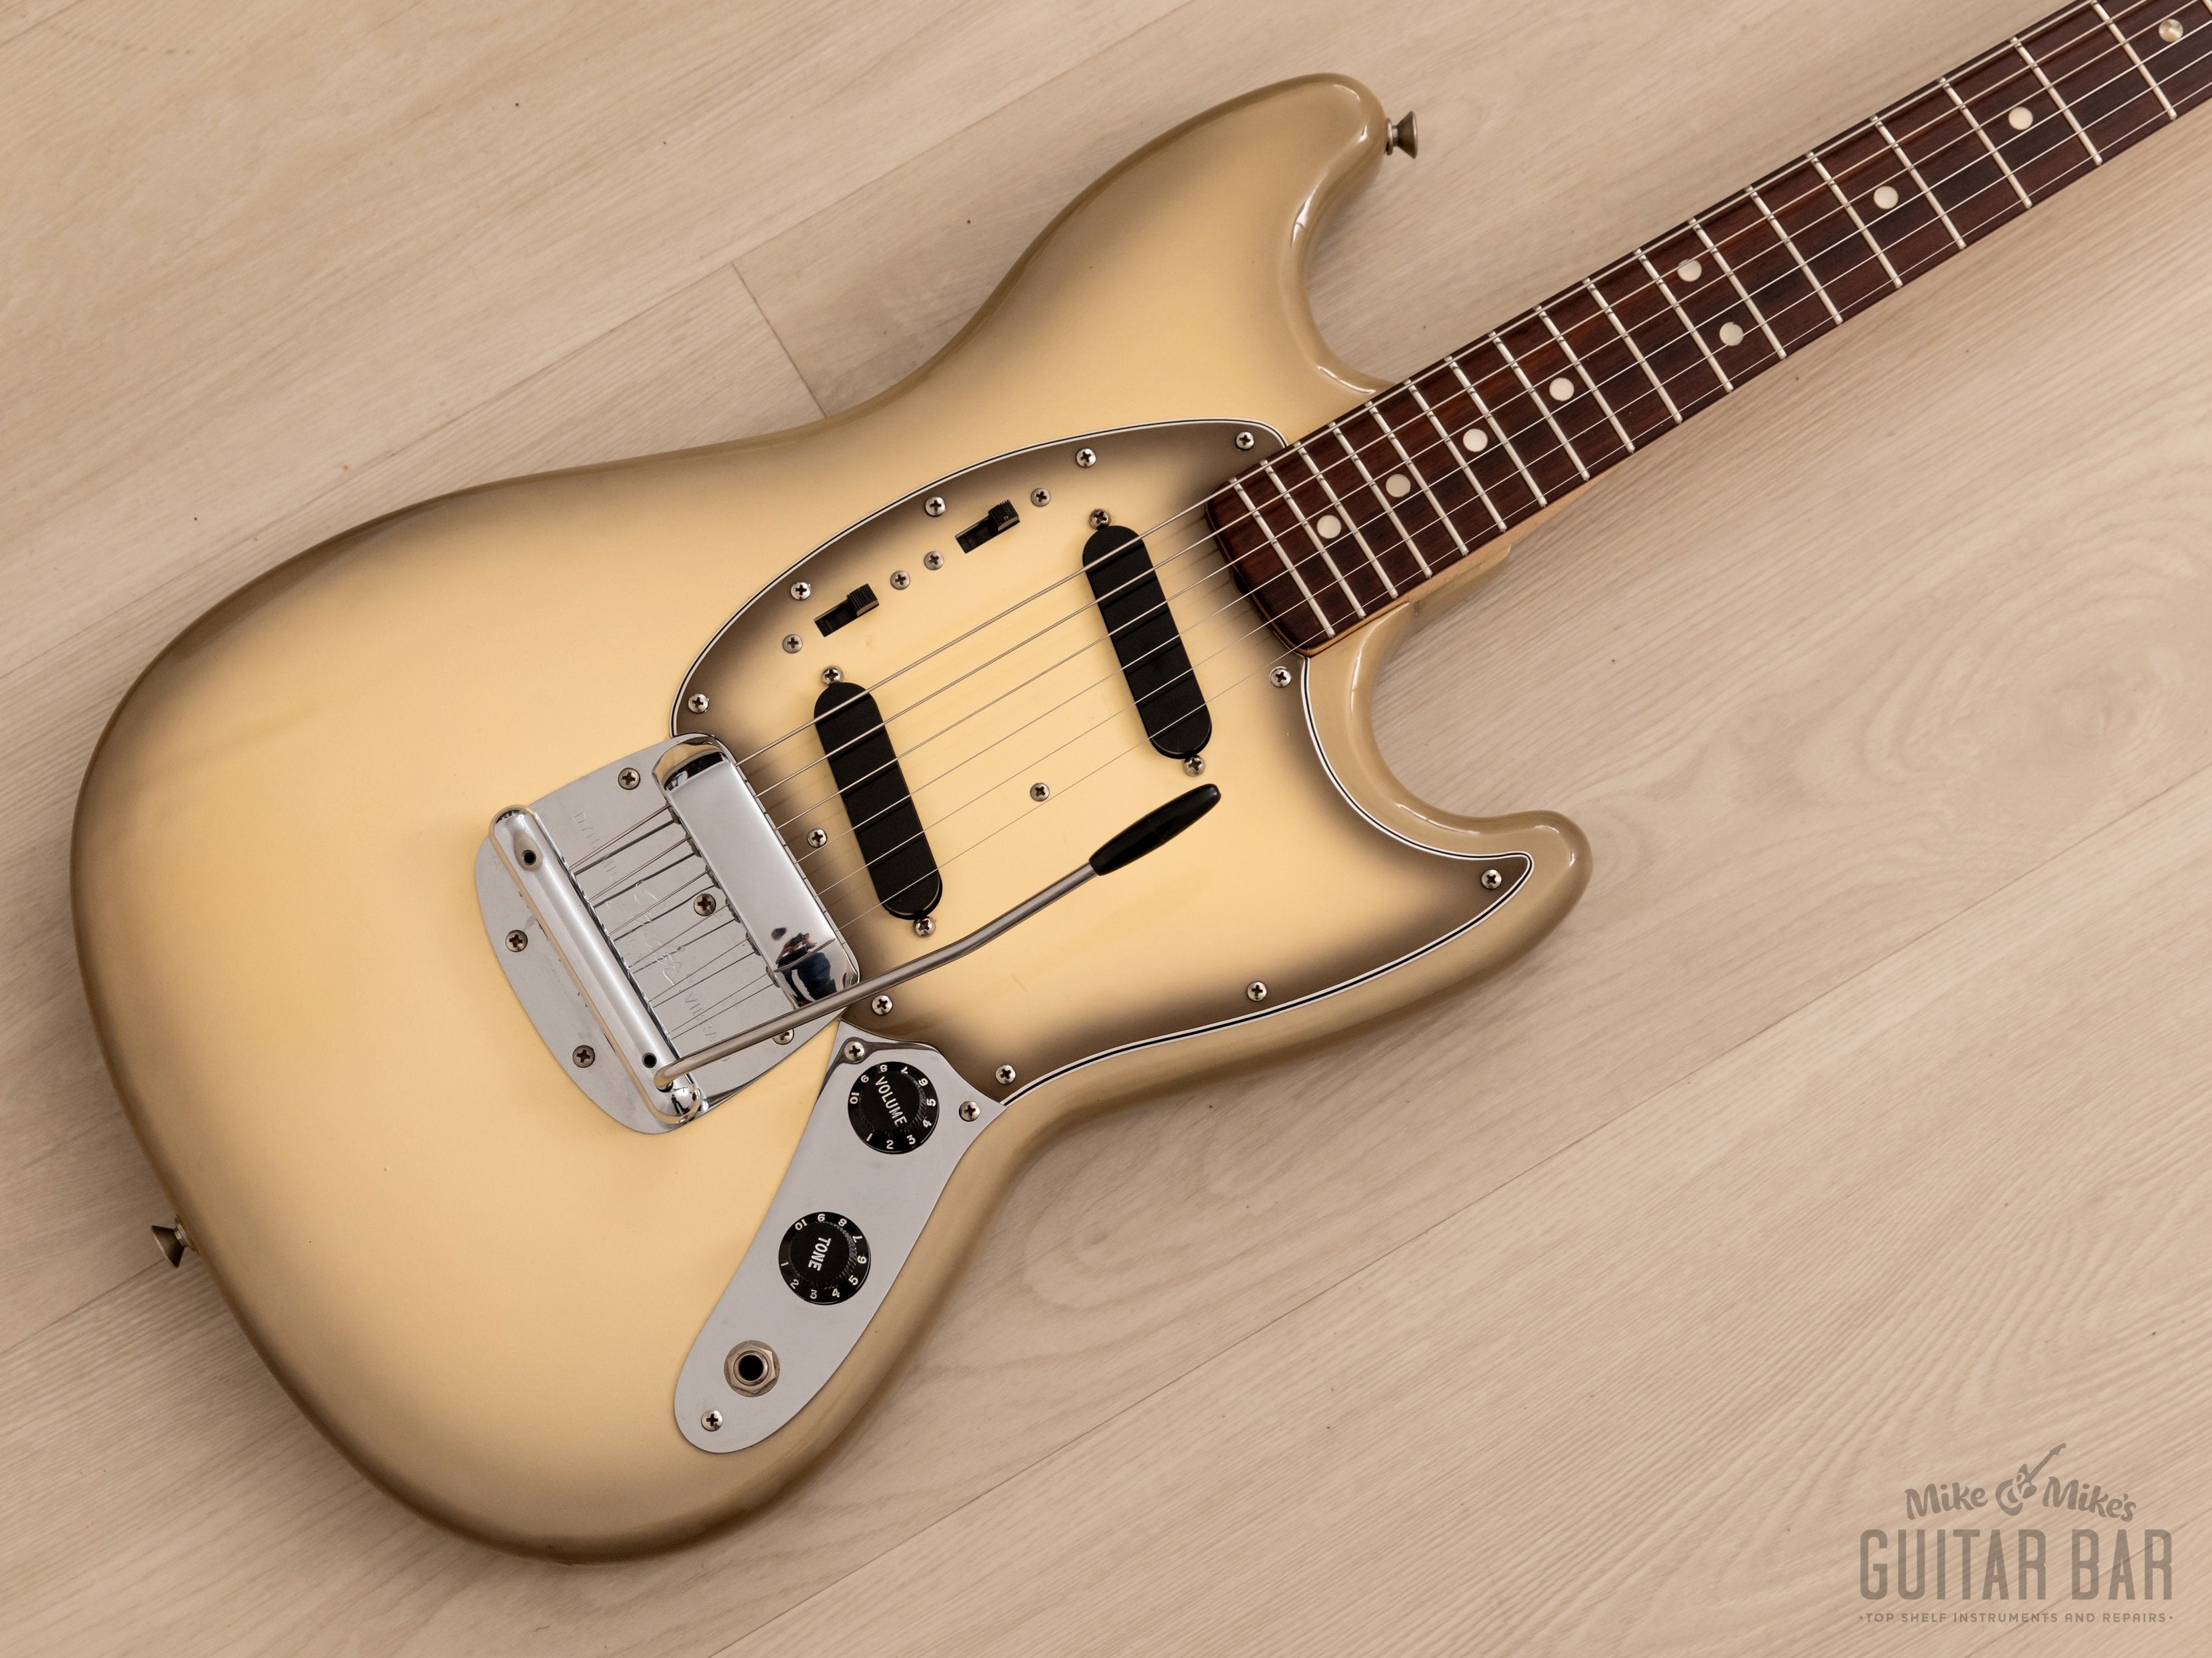 1978 Fender Mustang Vintage Electric Guitar Antigua, Collector Grade w/ Case